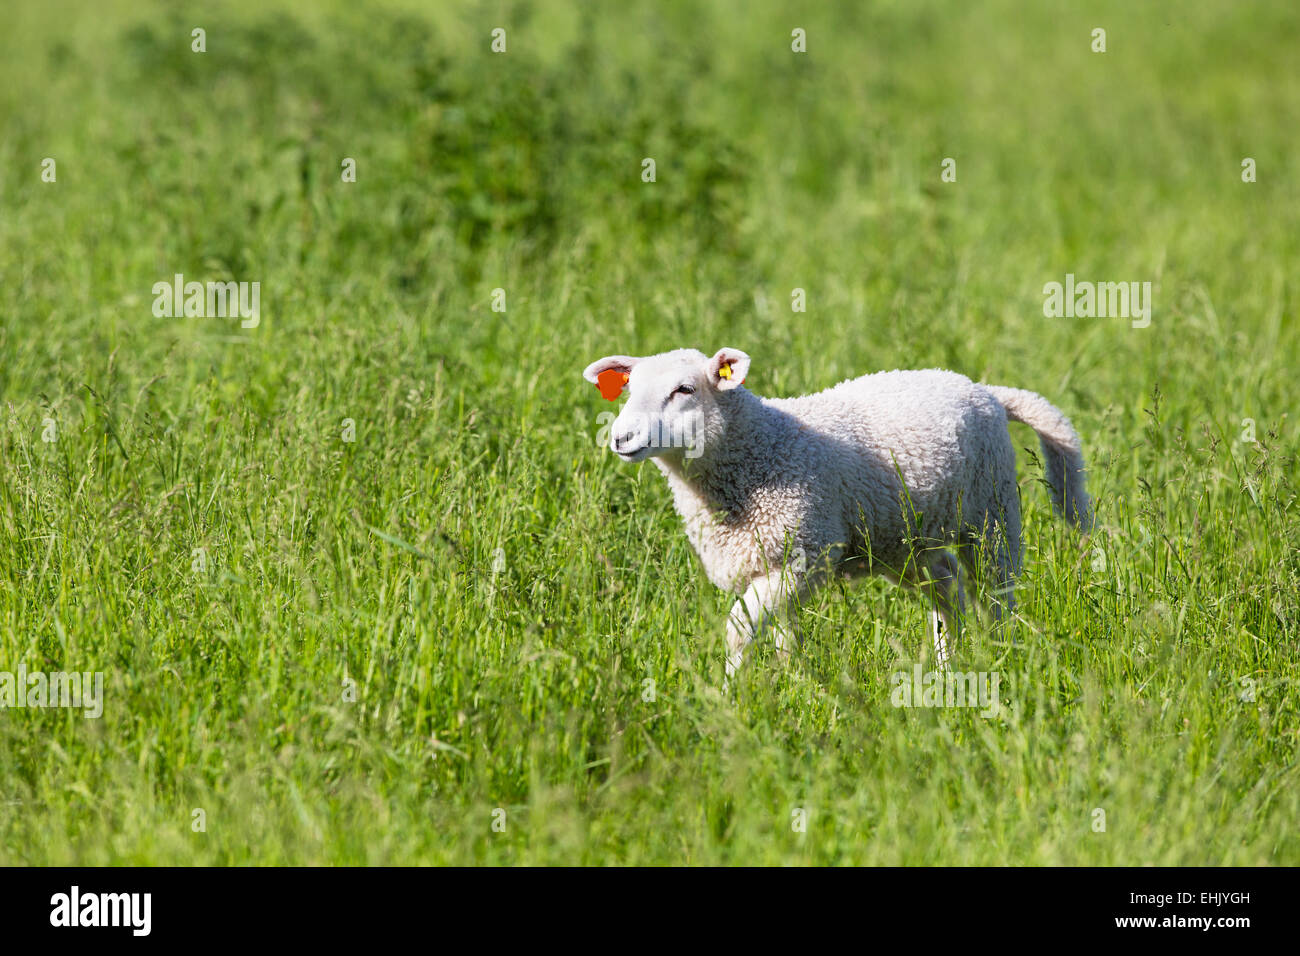 A cute lamb / young sheep walks in a green field. Stock Photo